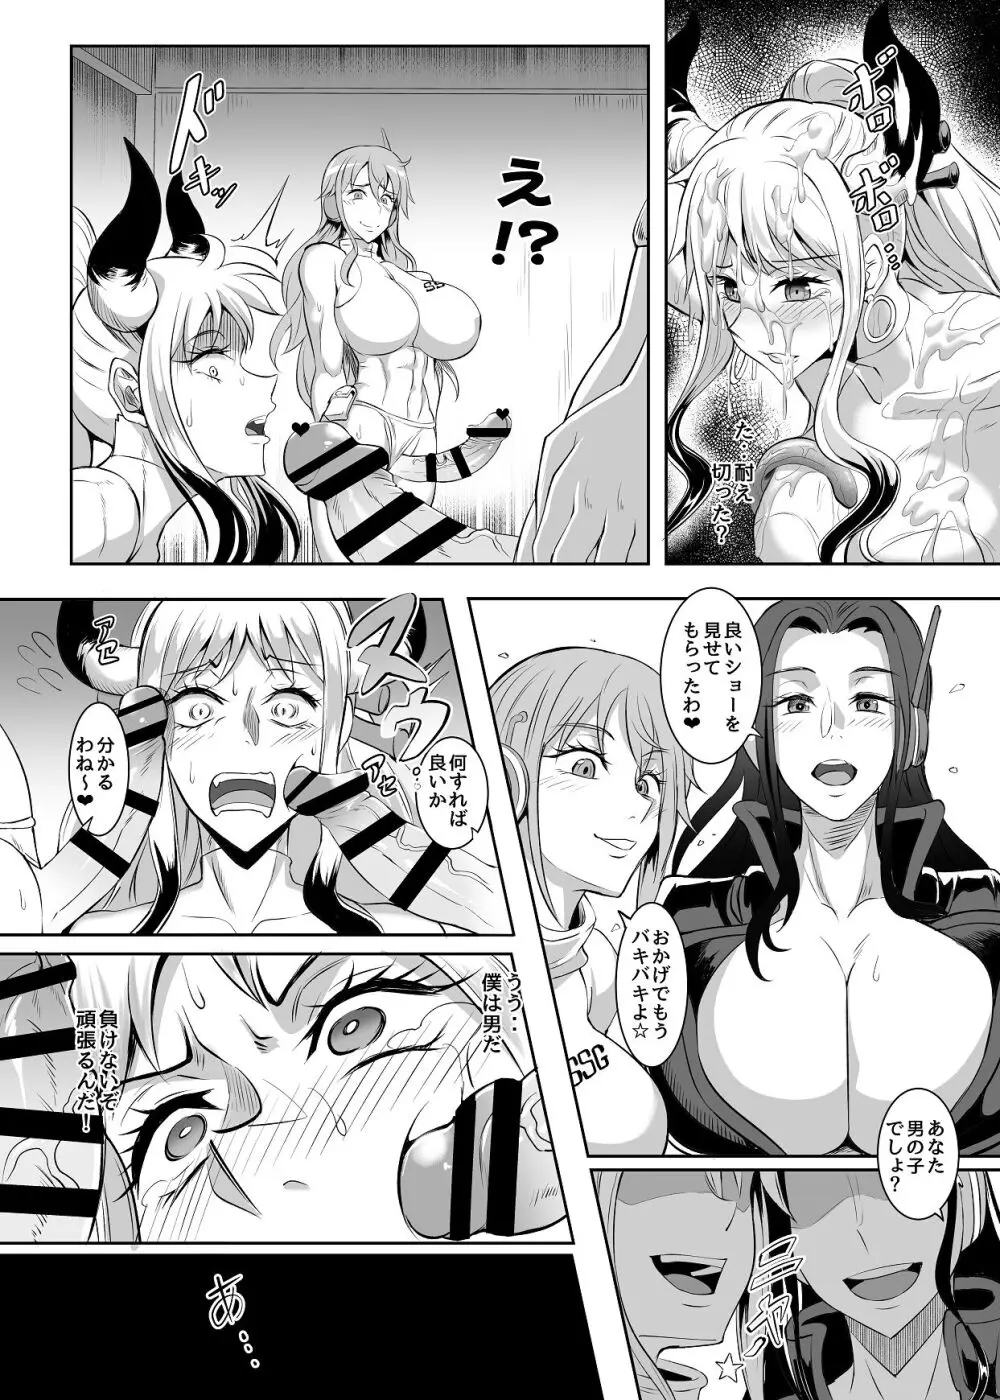 Pirate Girls 3 - page25